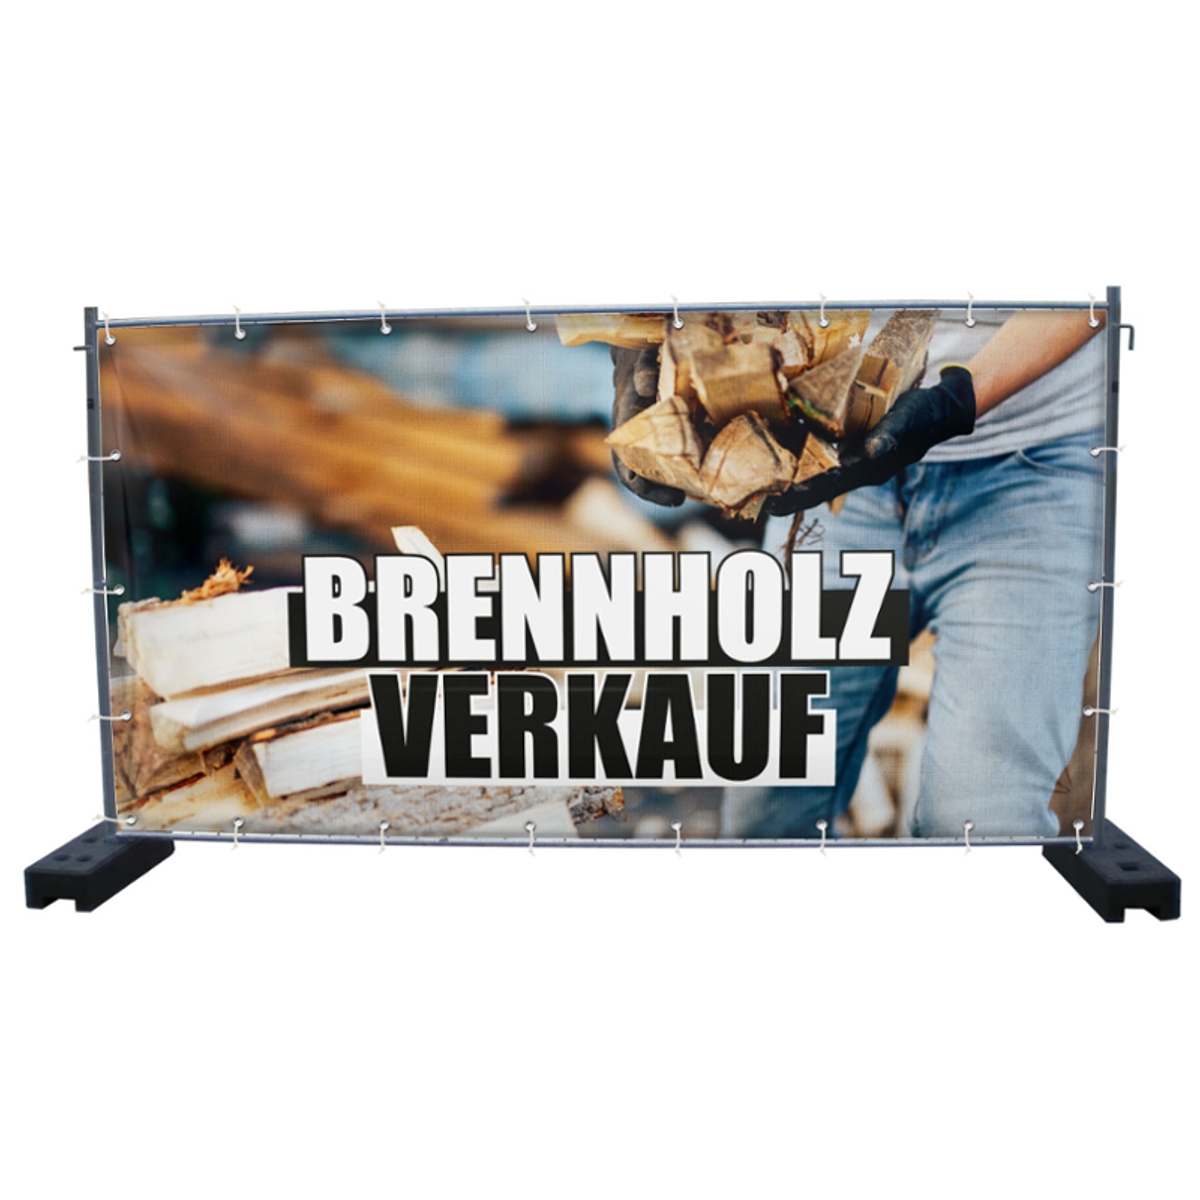 340 x 173 cm | Brennholz Verkauf Bauzaunbanner (4104)